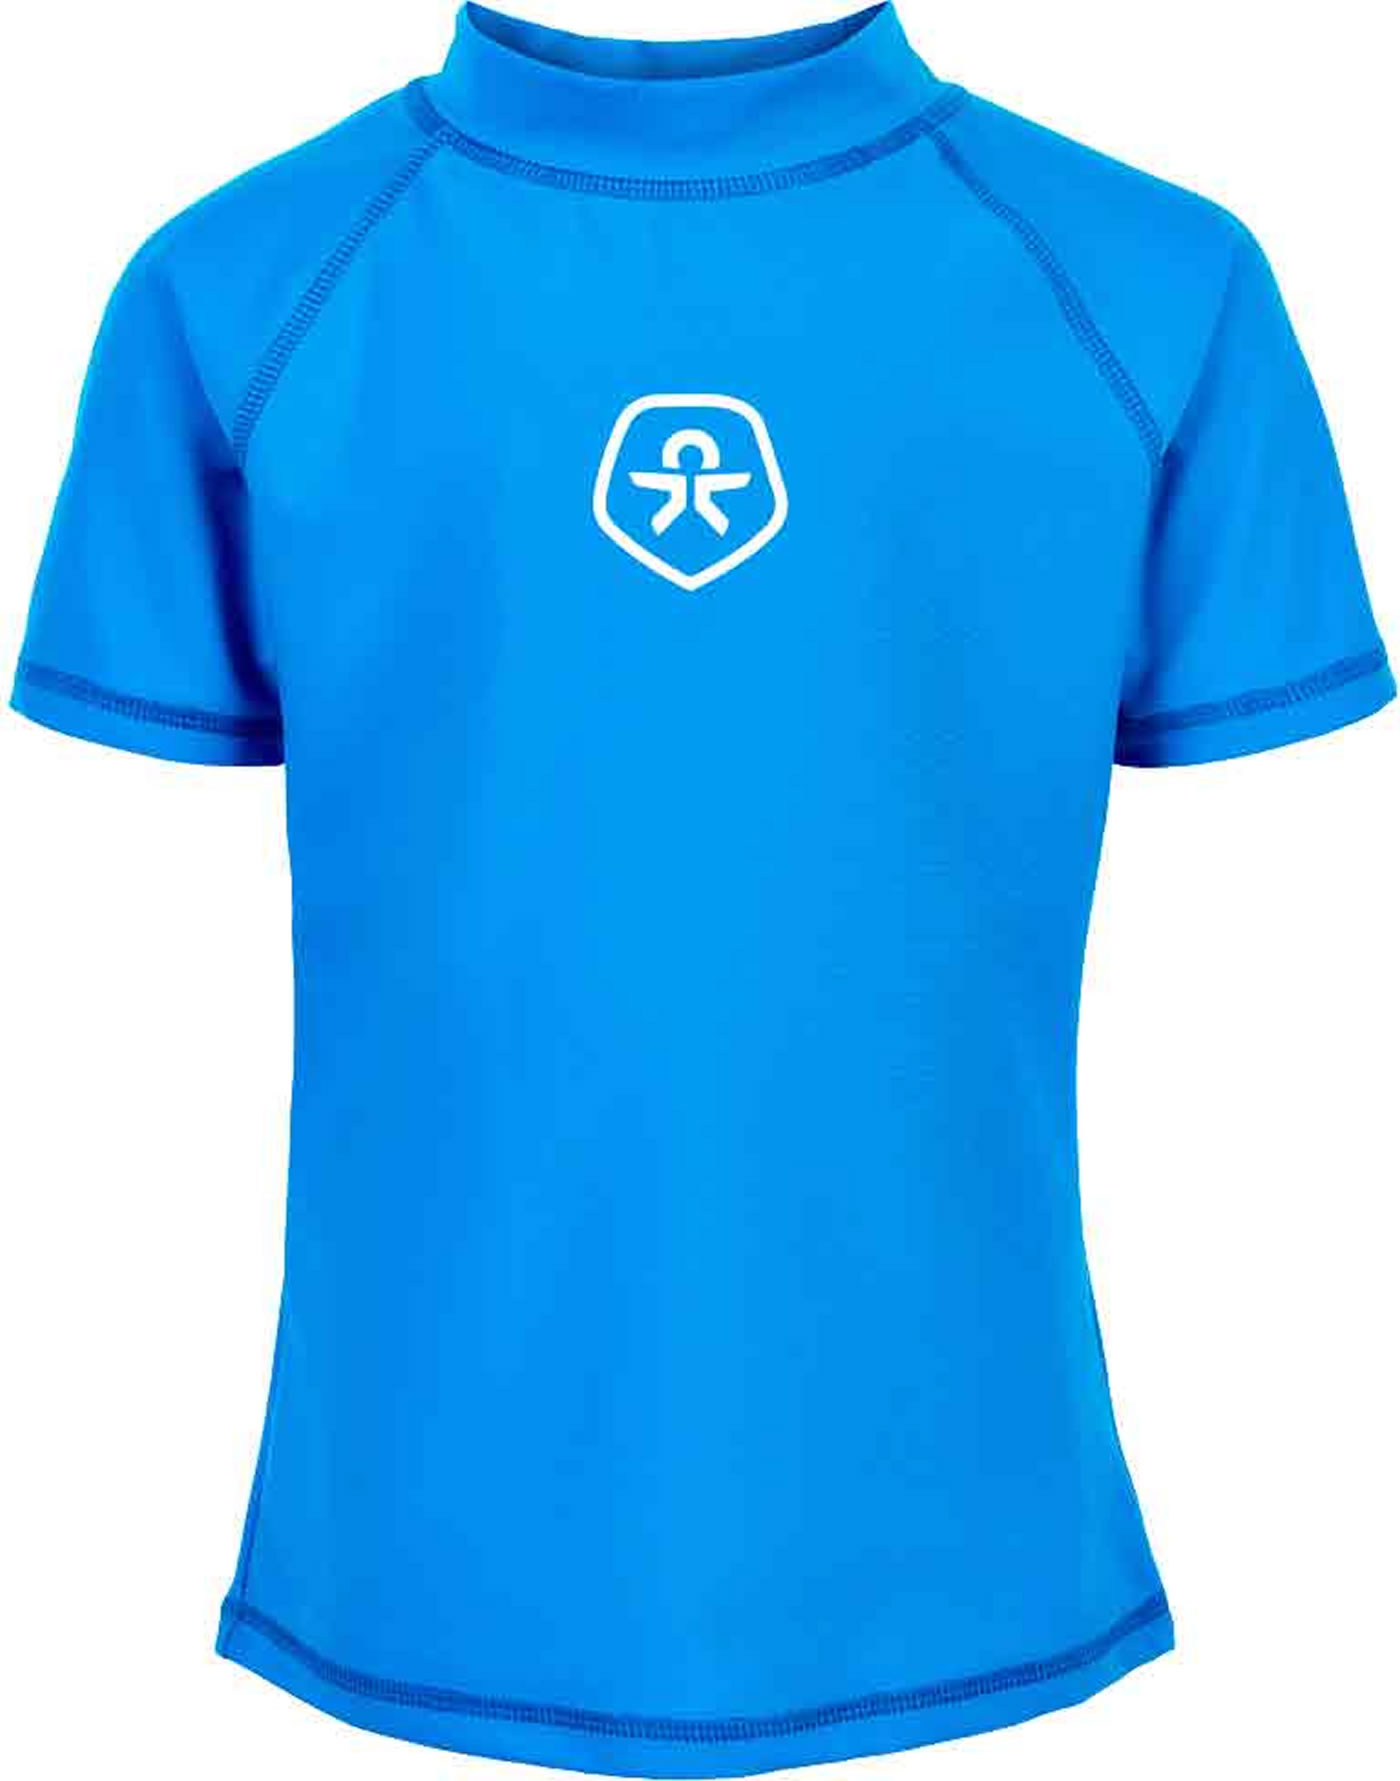 Color Kids Beach-Shirt TIMON UPF 50+ ultra blue shop online at Papiton.